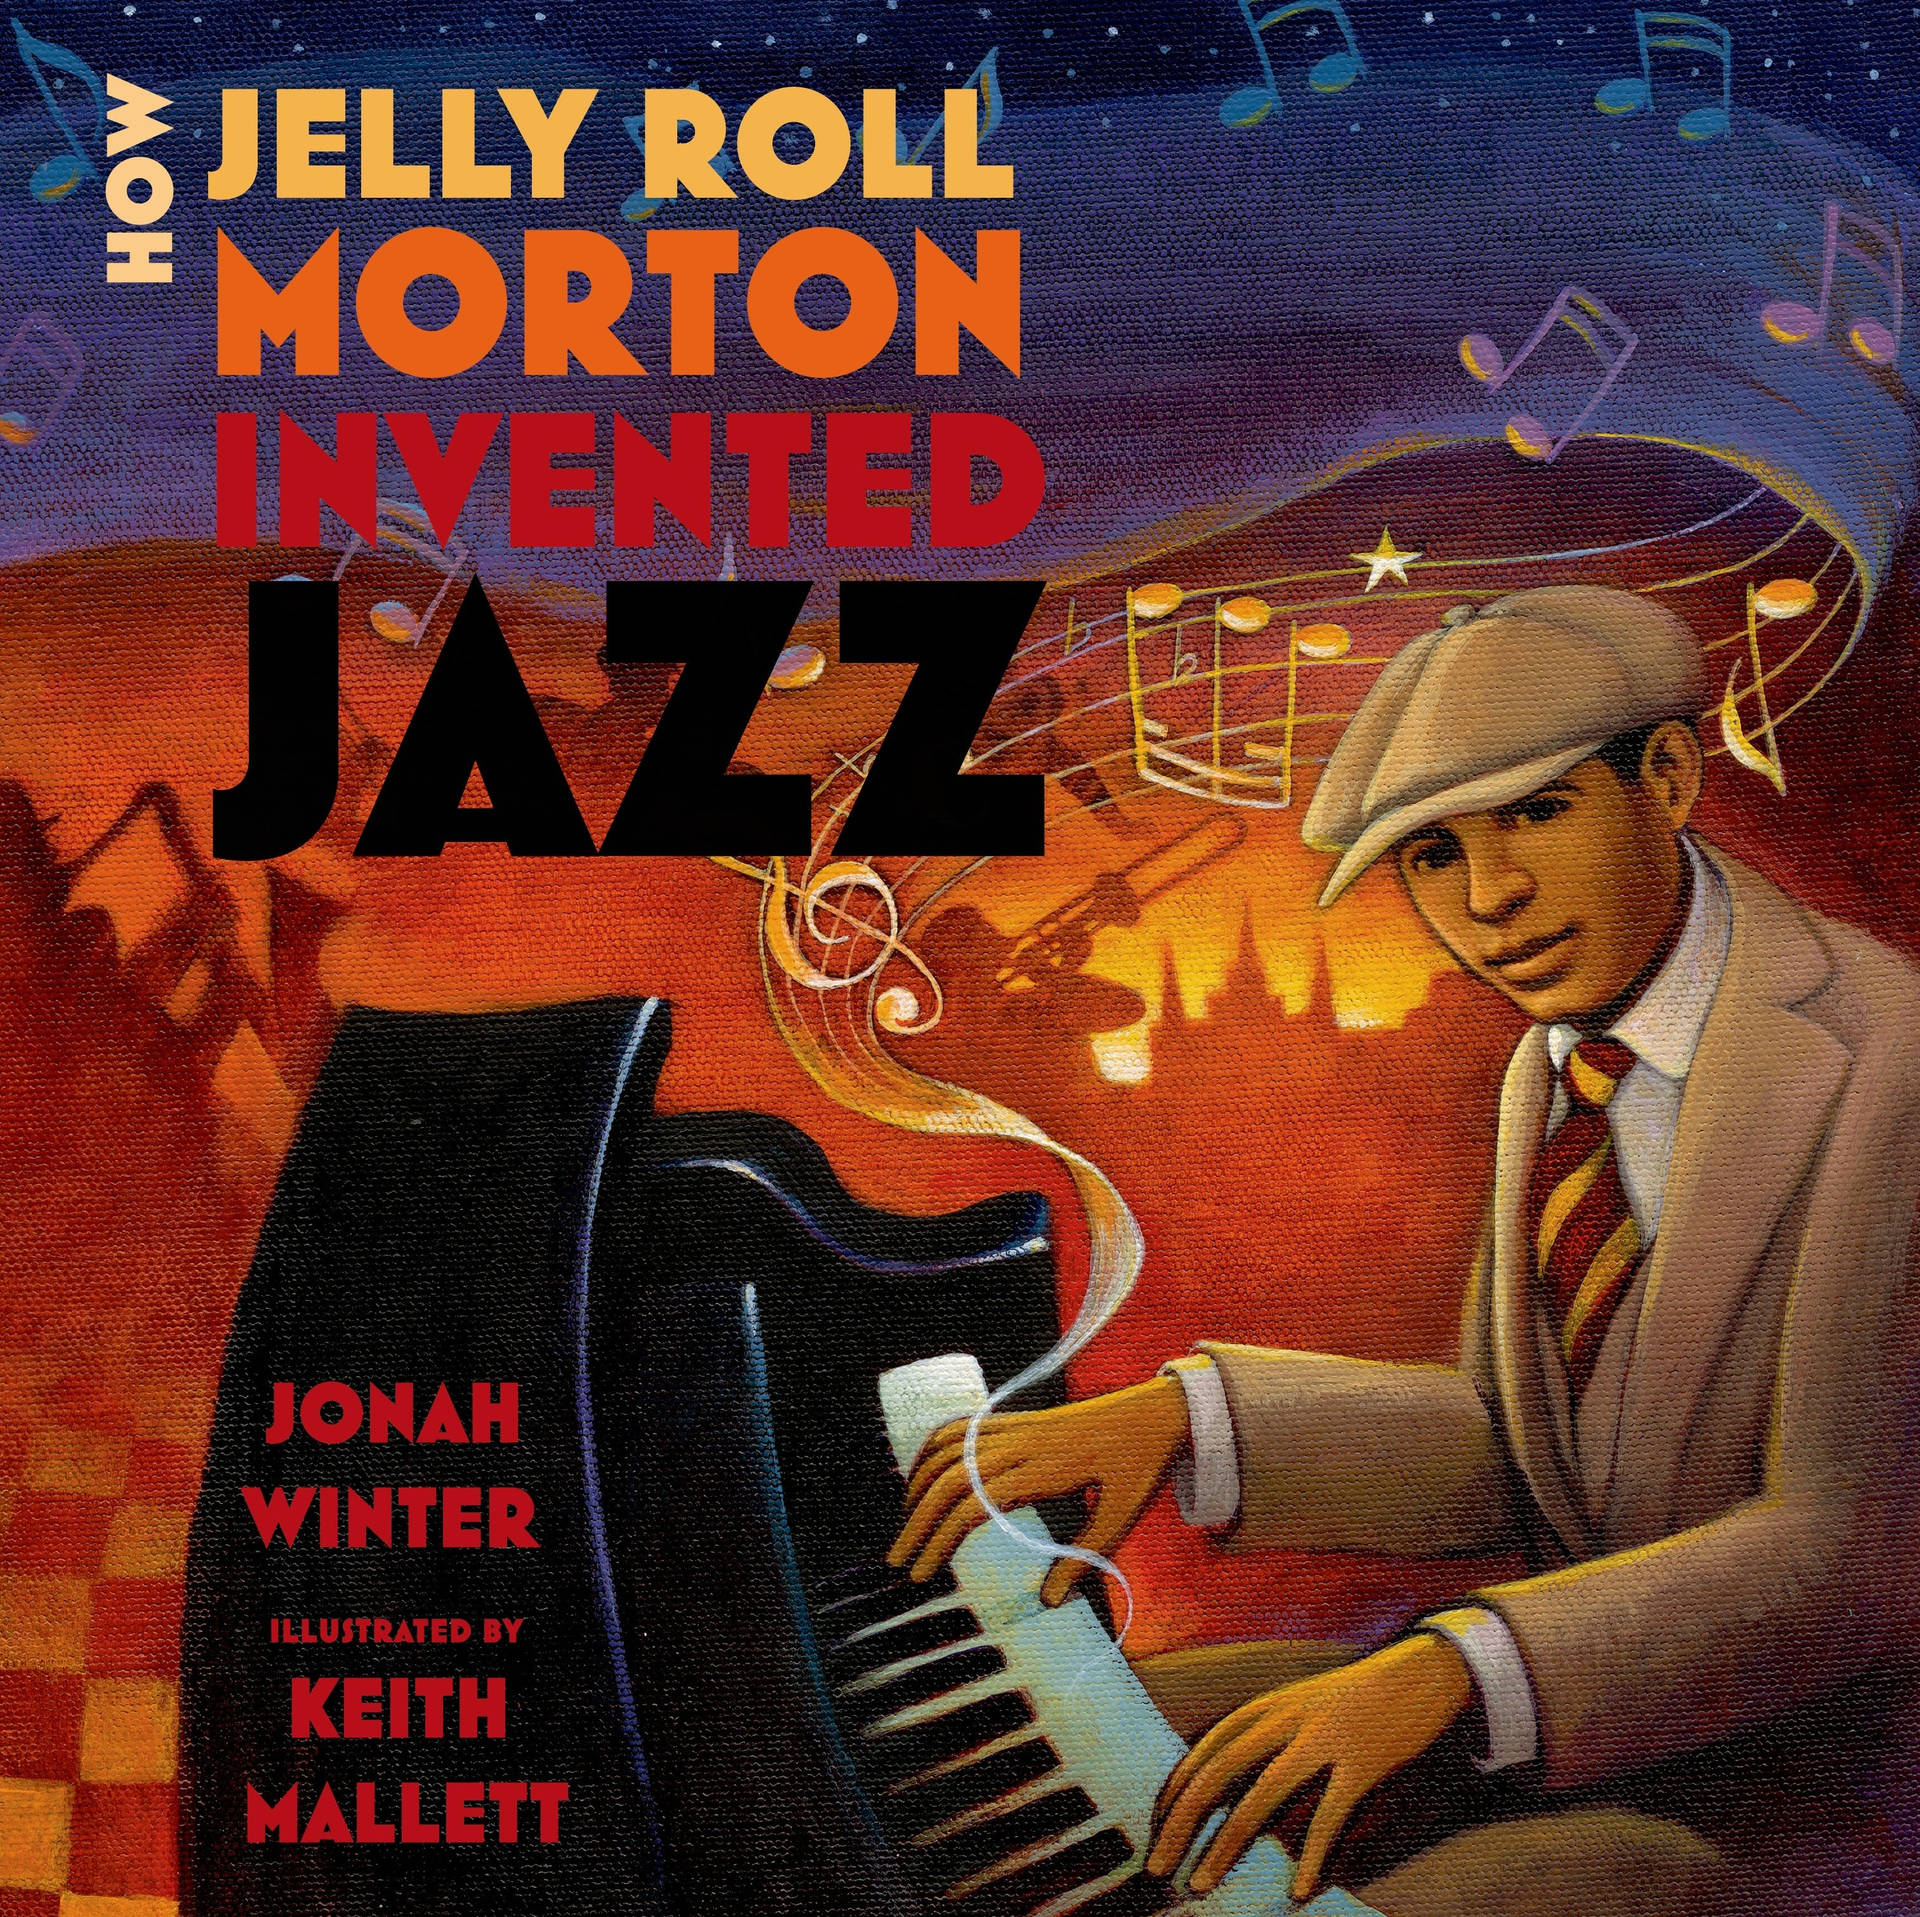 Jelly Roll Morton Book Cover Art Background